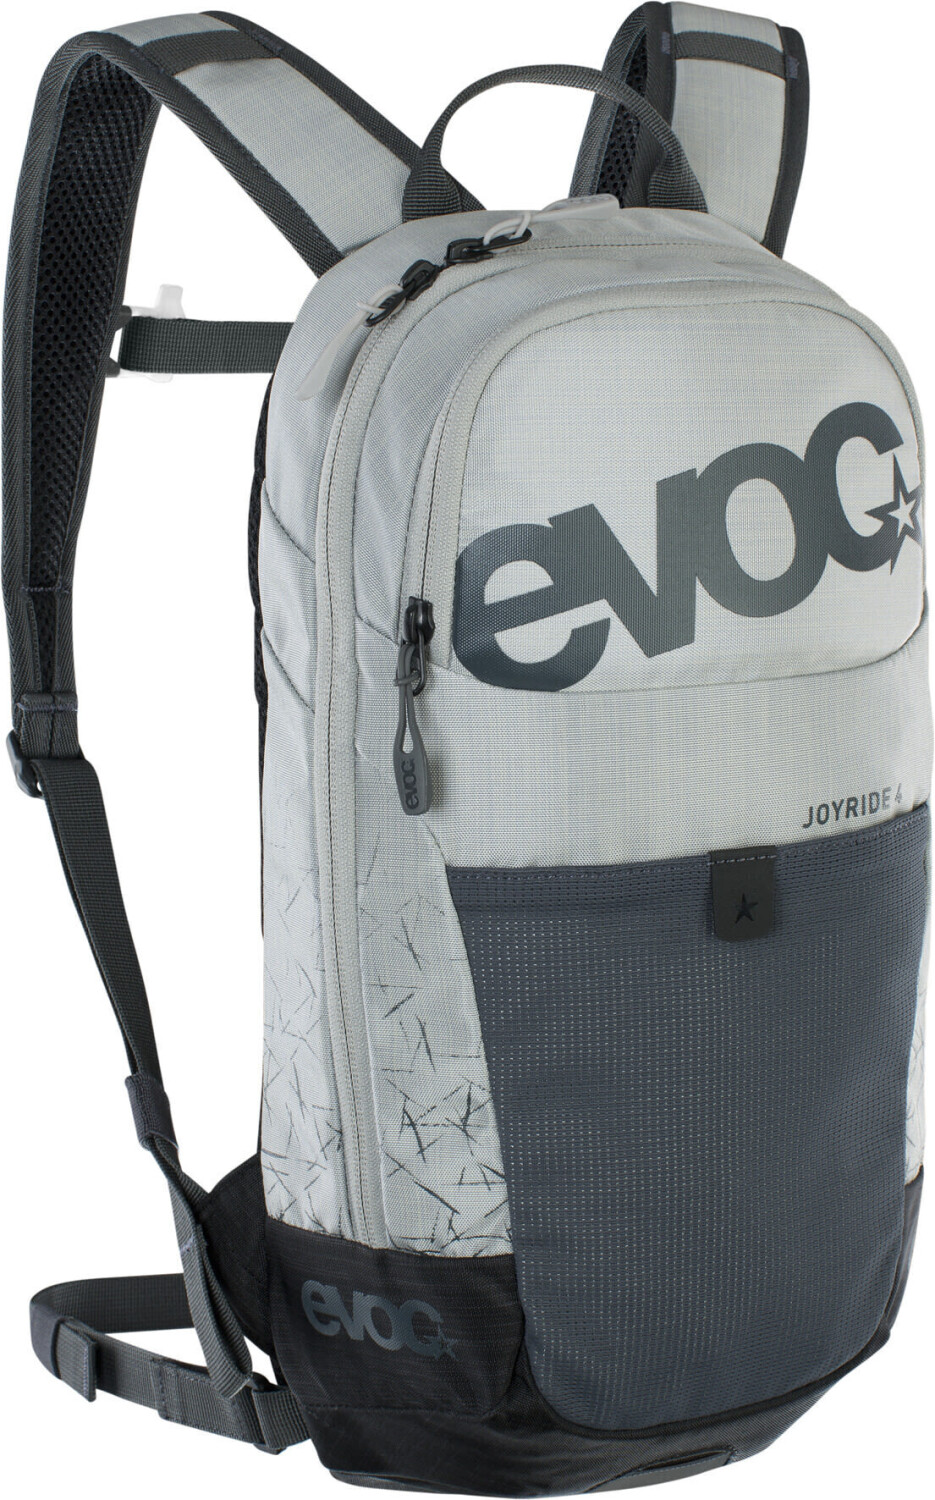 Photos - Backpack Evoc Joyride 4L silver/carbon grey 